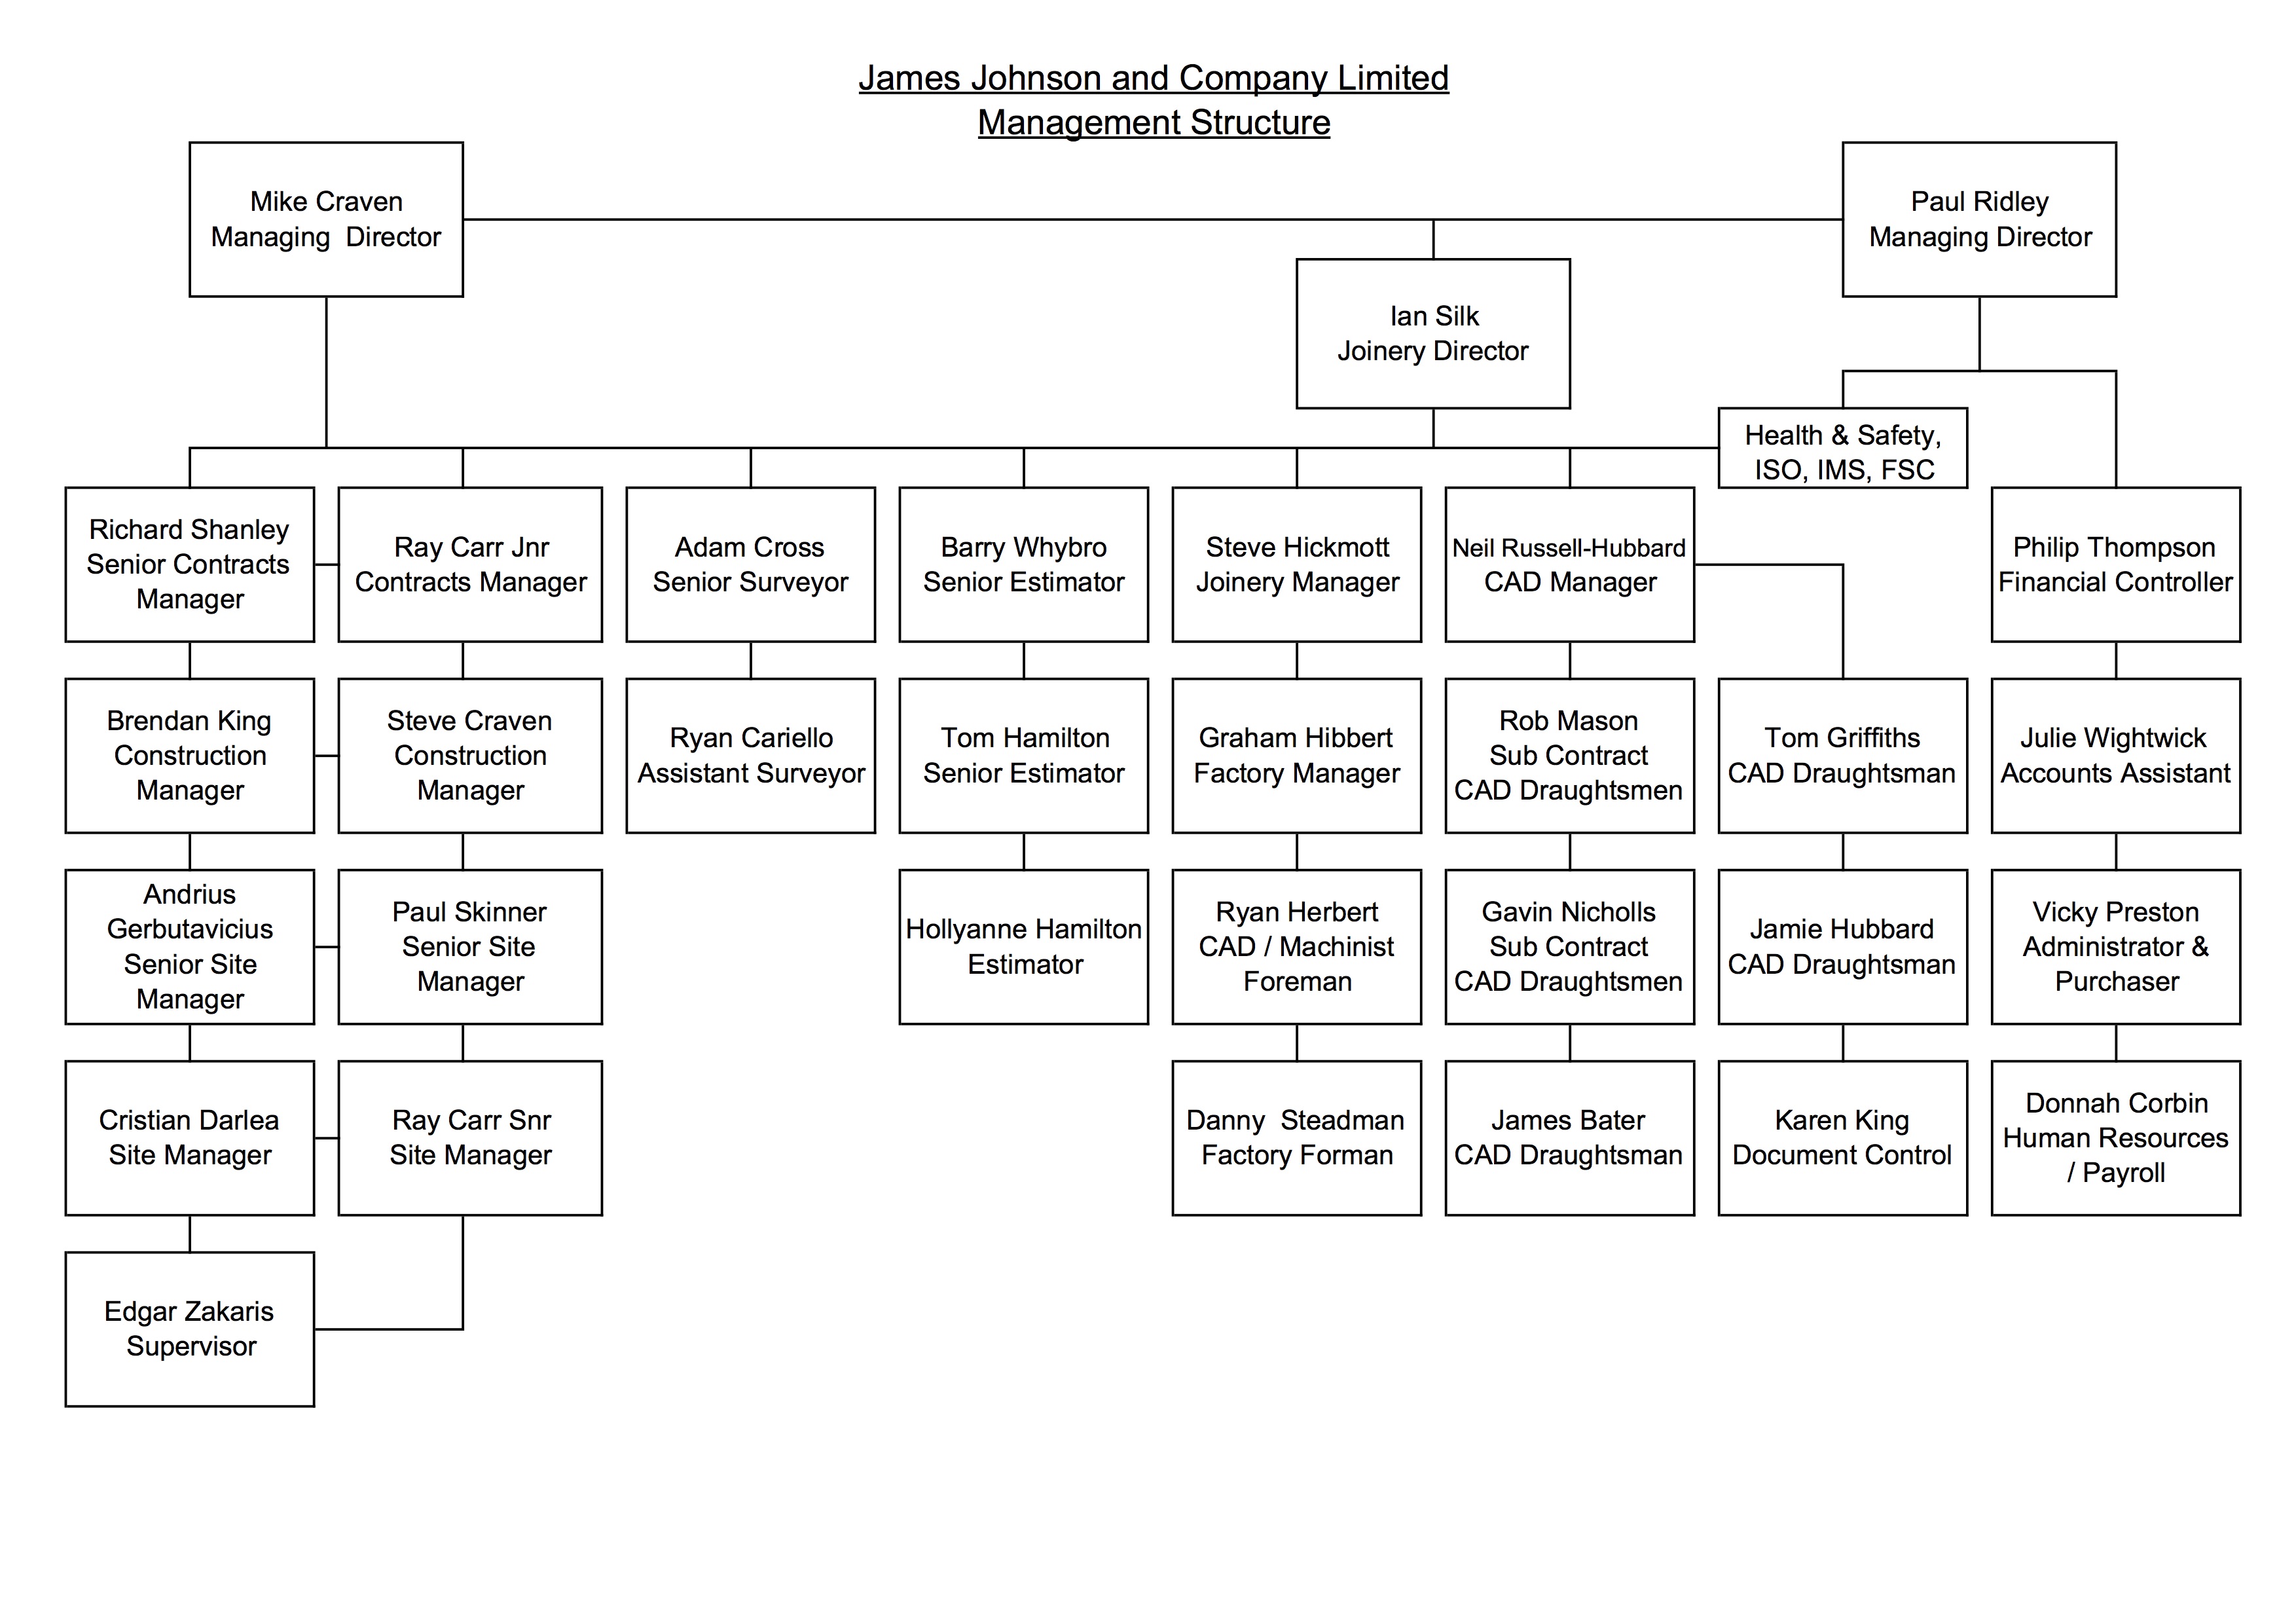 Organisation_Chart_2016 - James Johnson & Co Ltd.